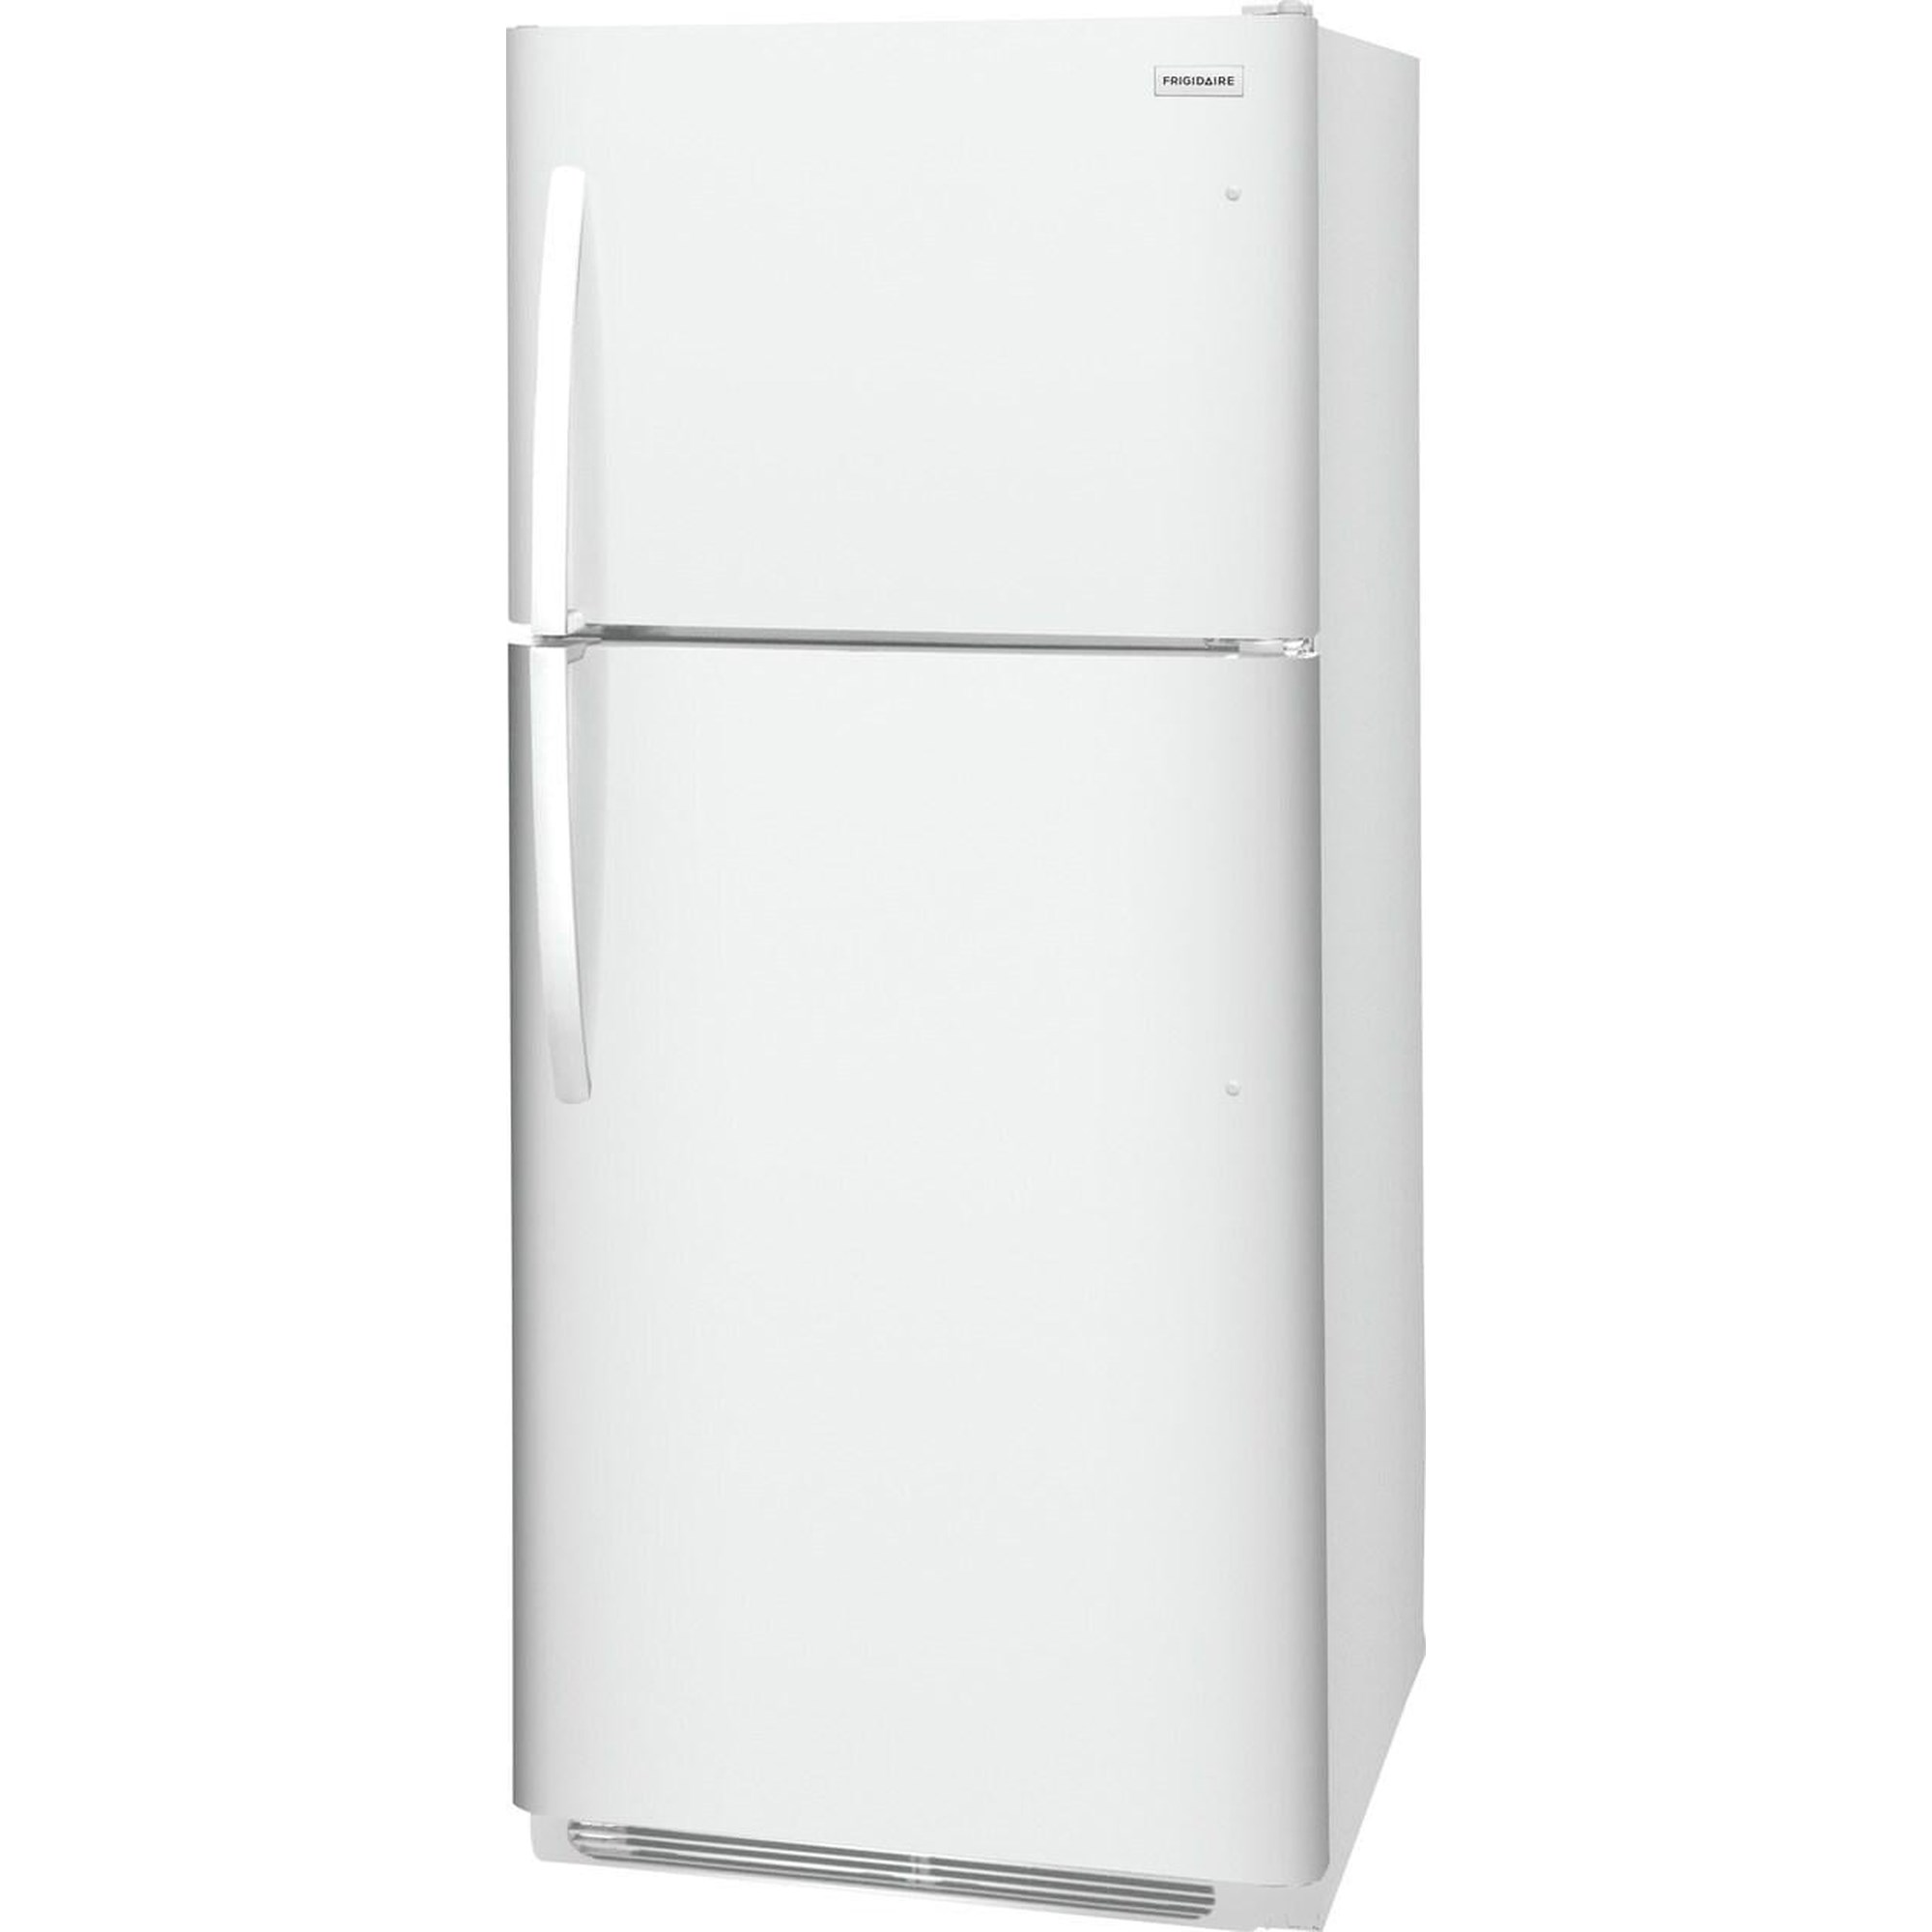 Frigidaire 20.5 Cu. Ft. Stainless Steel Top Freezer Refrigerator -  FRTD2021AS